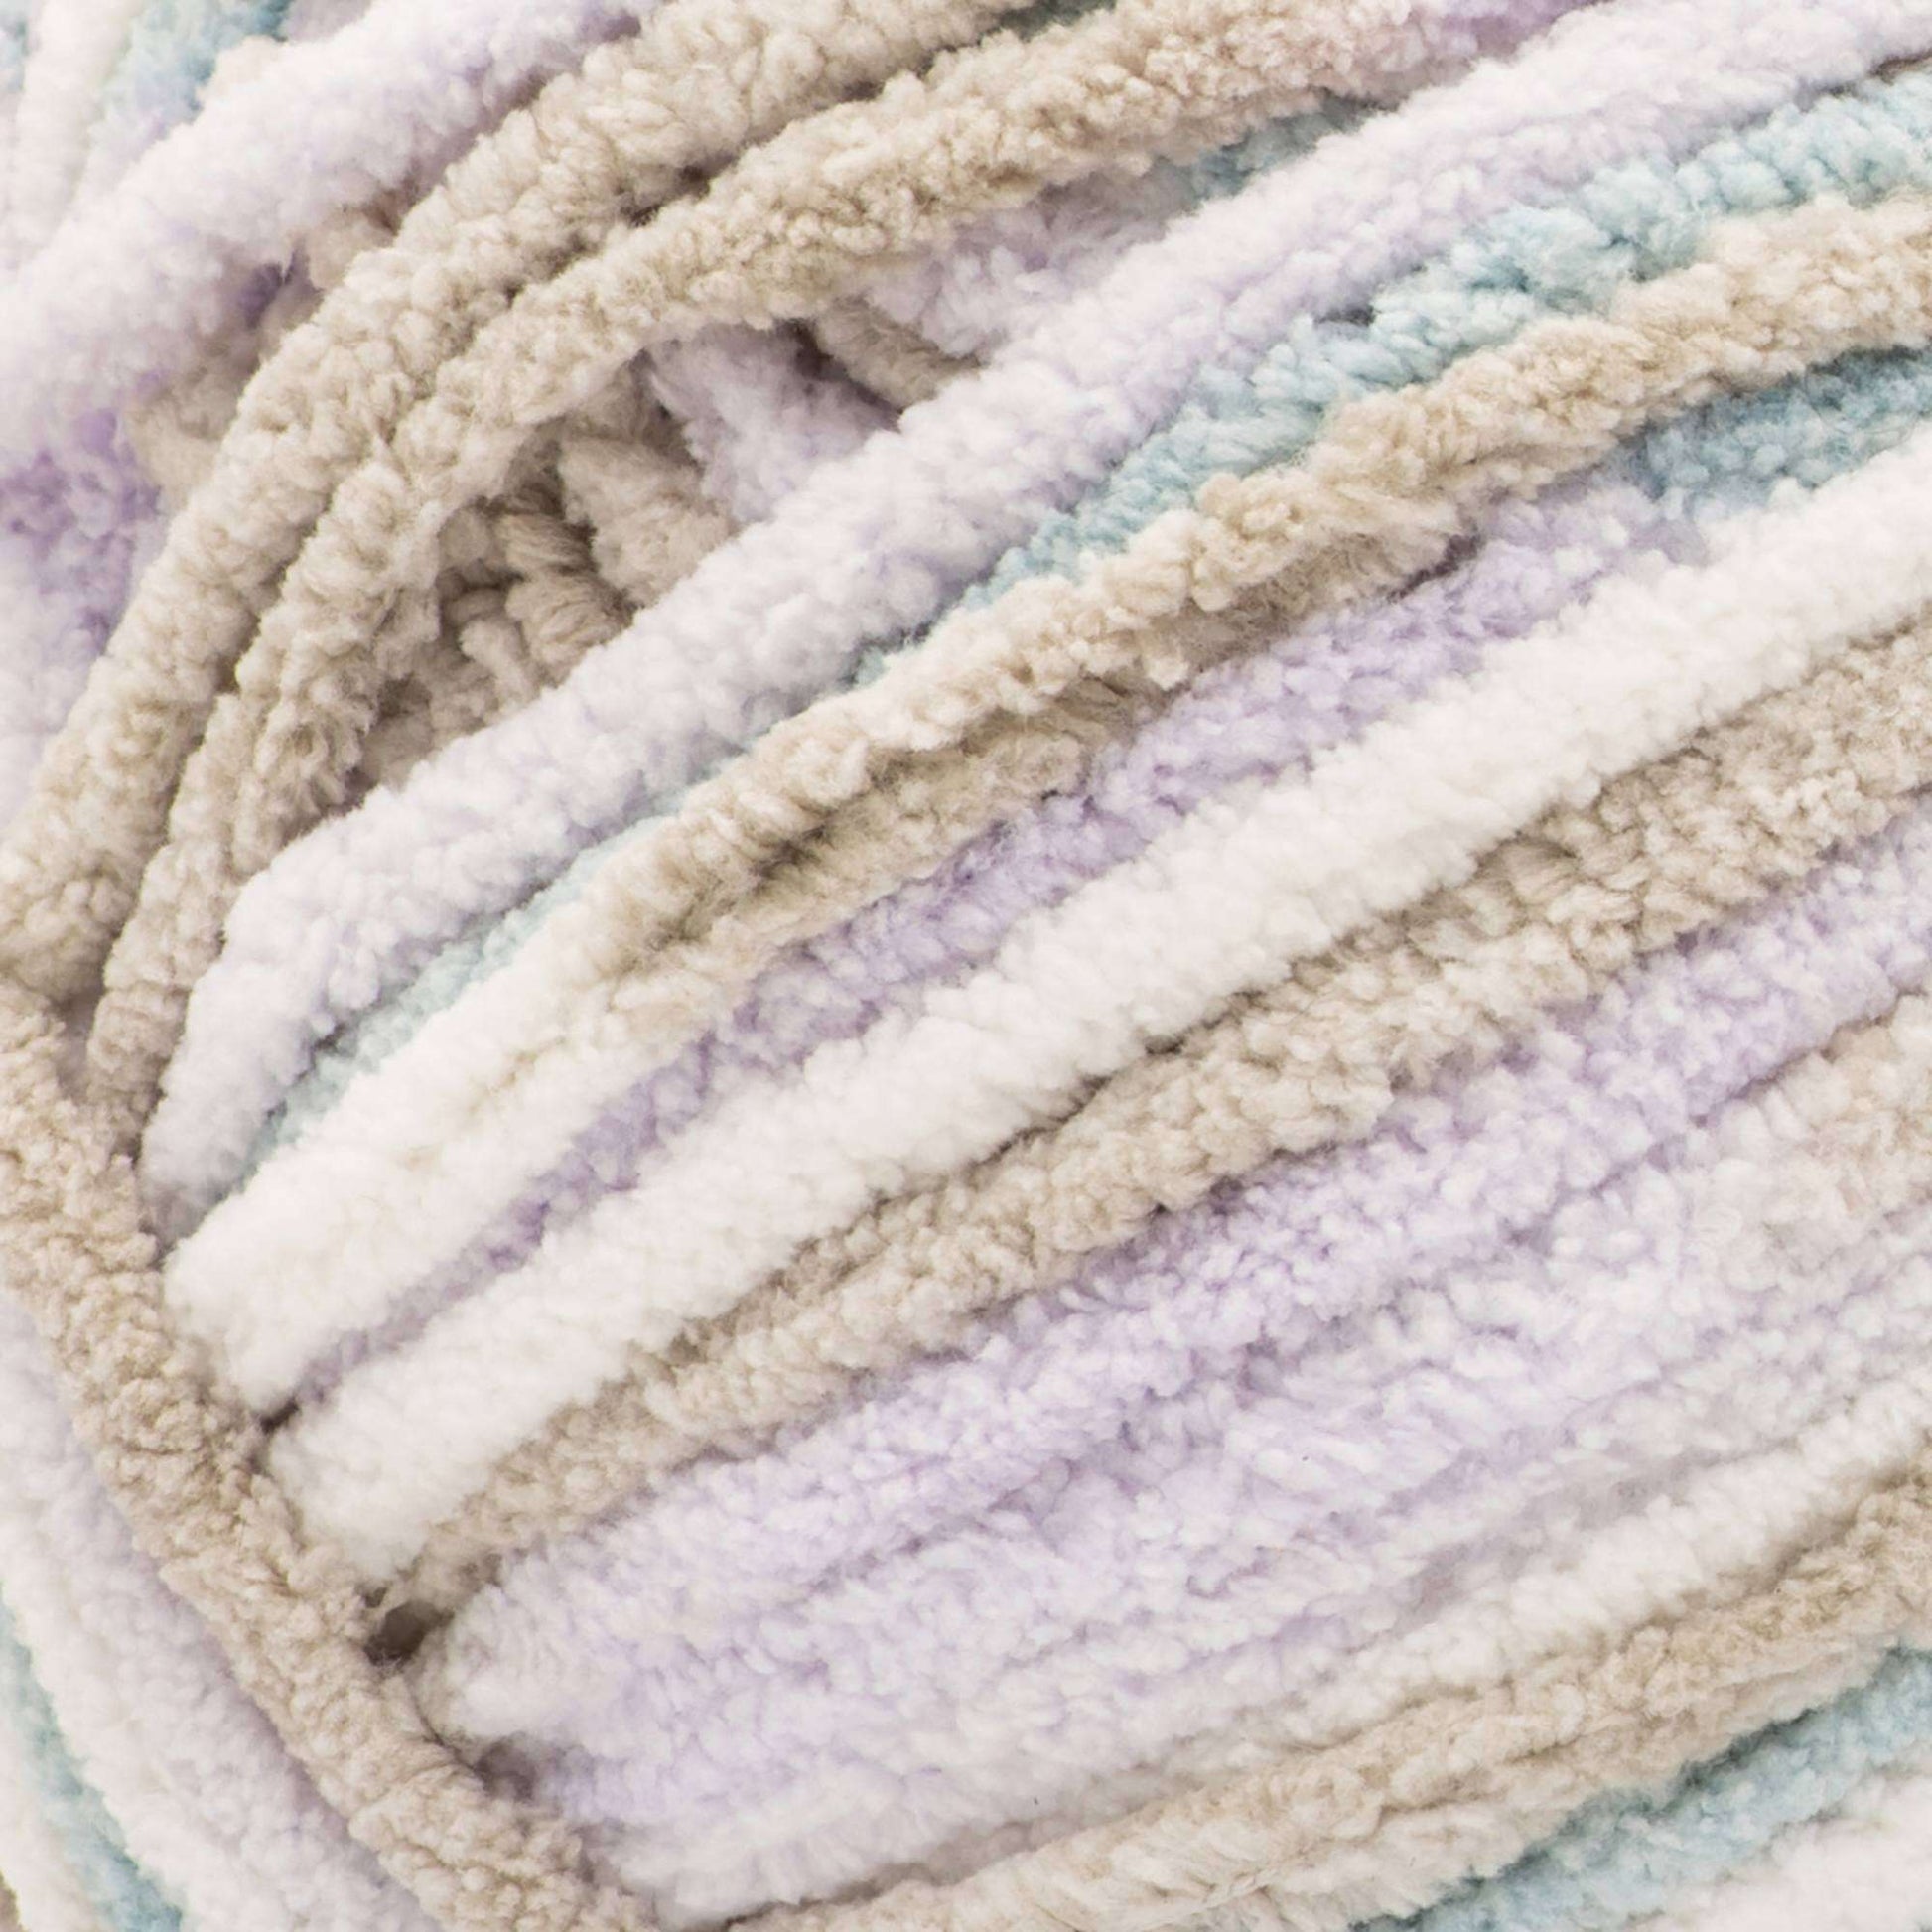 Yarnspirations Bernat Baby Blanket Yarn 10.5 oz. 220 yds. 8